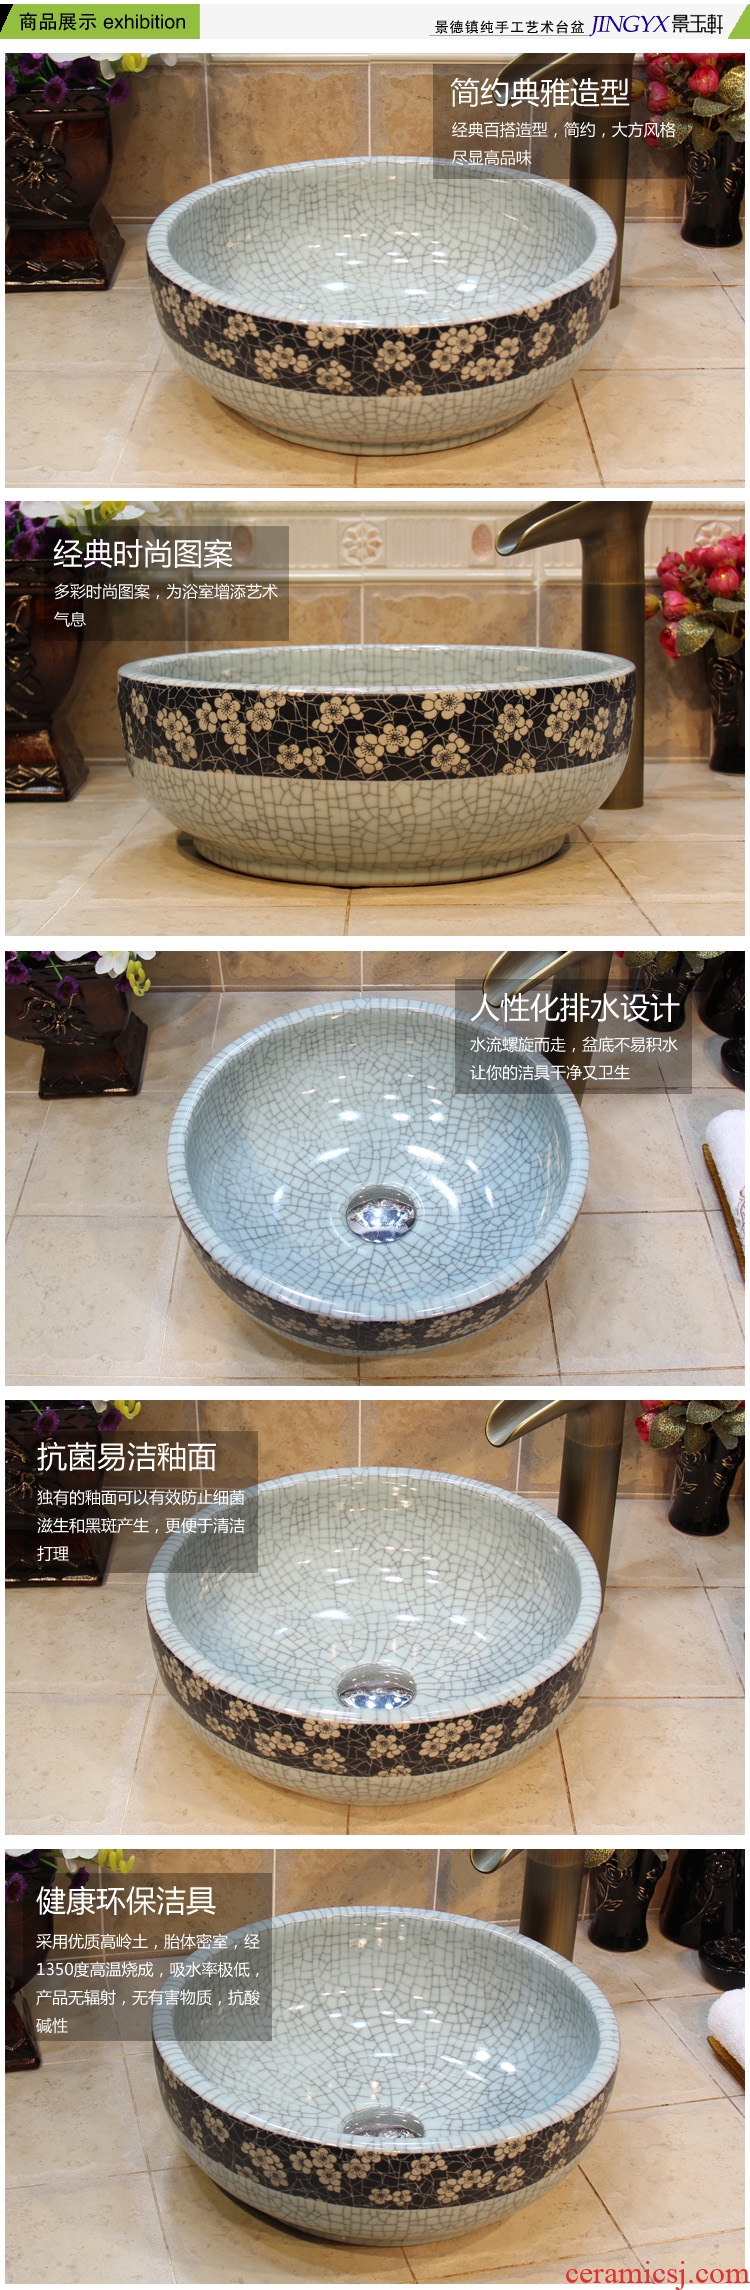 Jingdezhen ceramic art basin small 35 crack ice name plum stage basin sinks art basin of much money